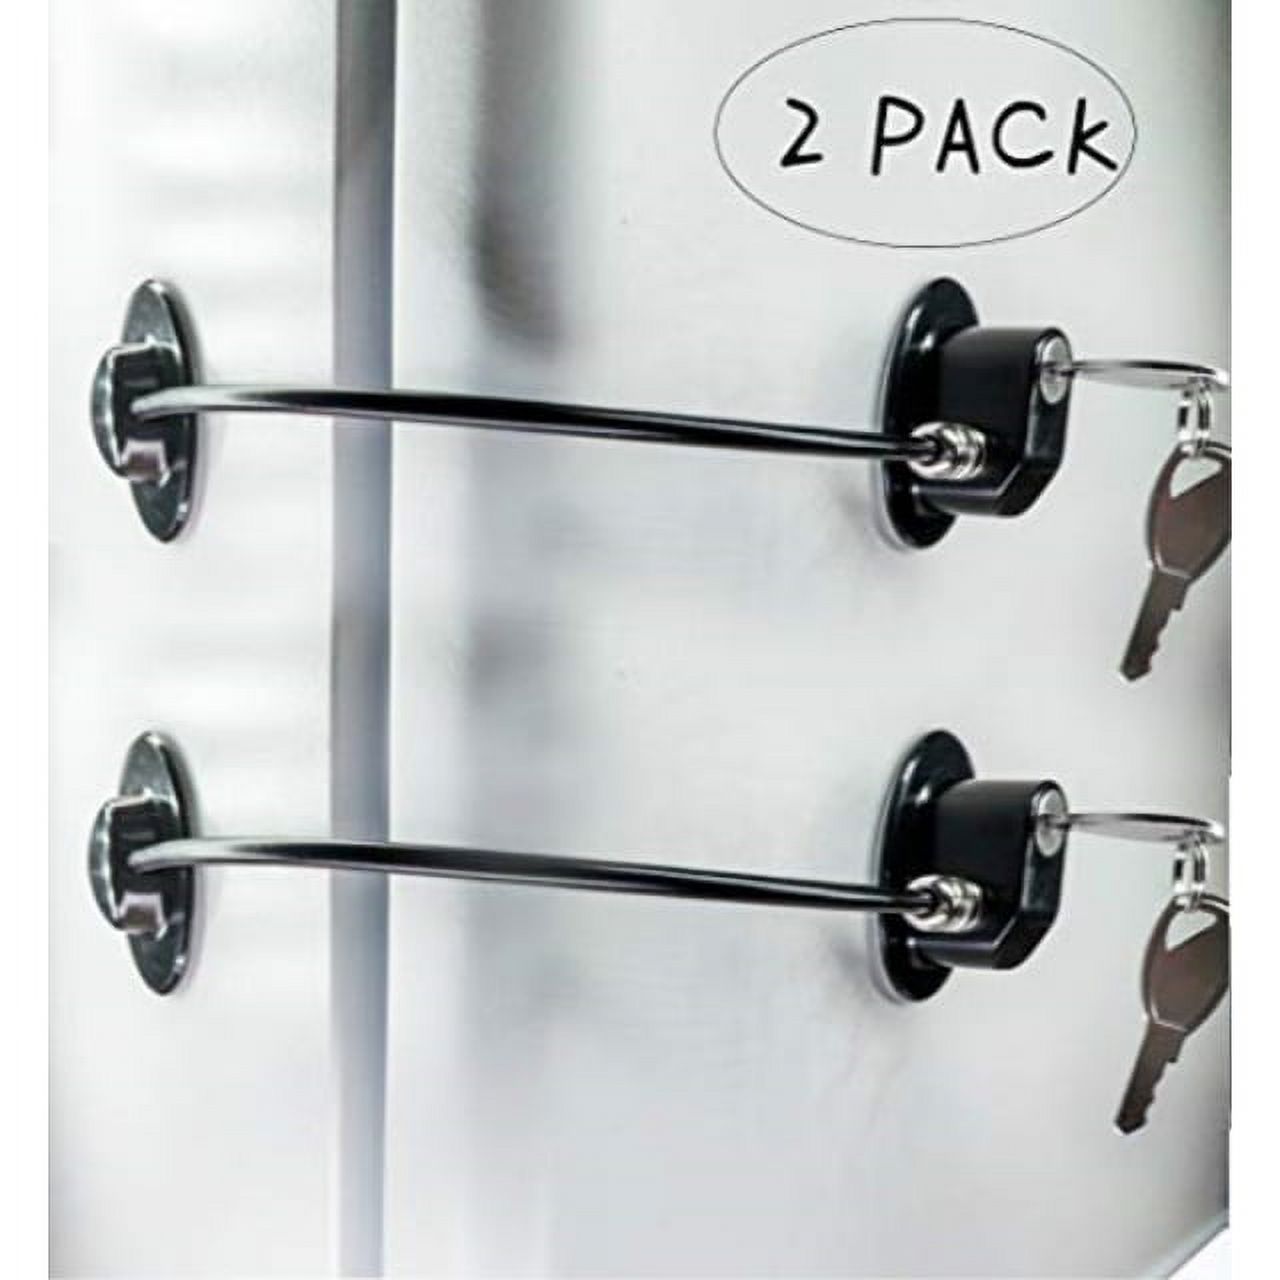 2 pack refrigerator door locks with 4 keys, file drawer lock, freezer door  lock and child safety cabinet locks by rezipo black 